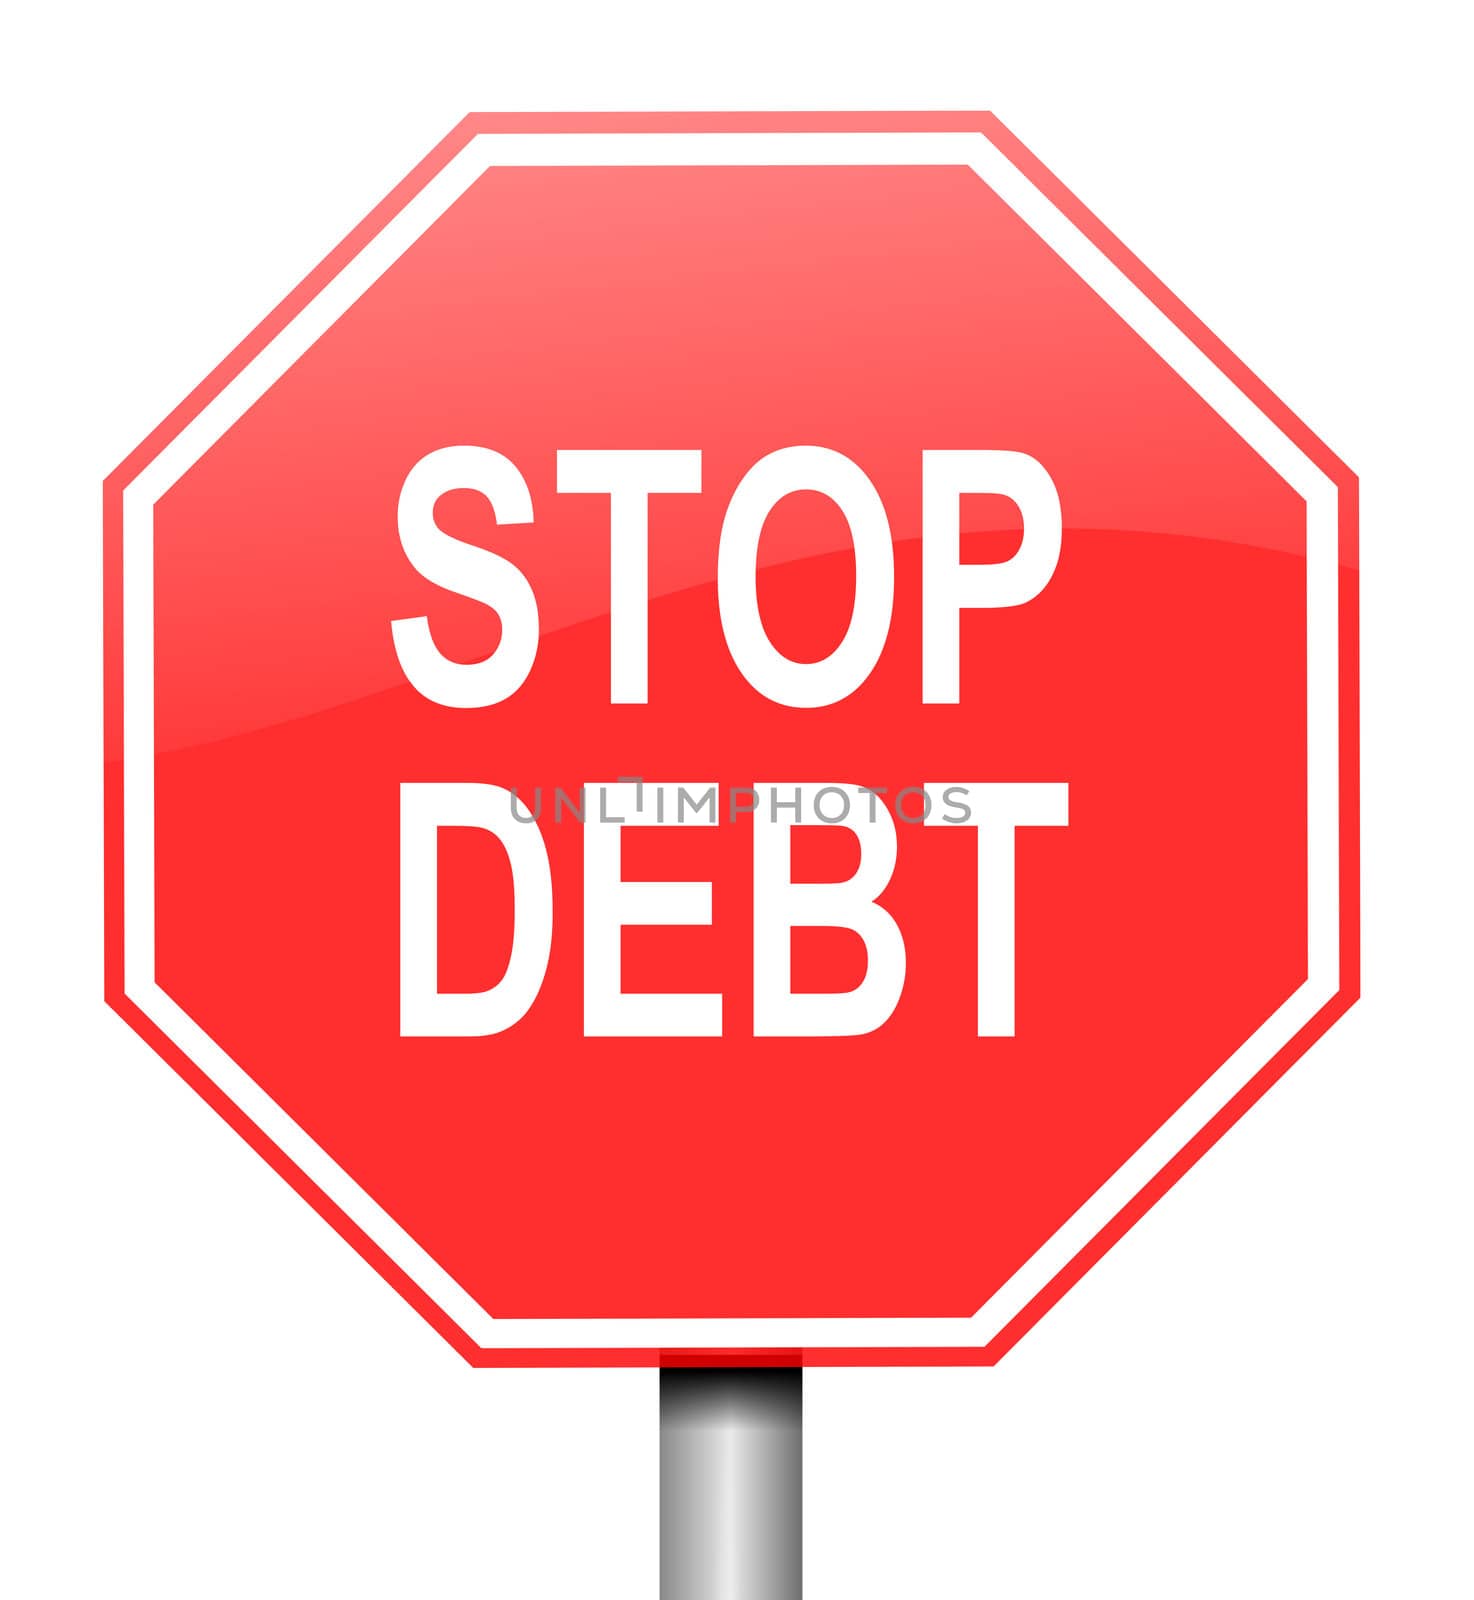 Stop debt concept. by 72soul